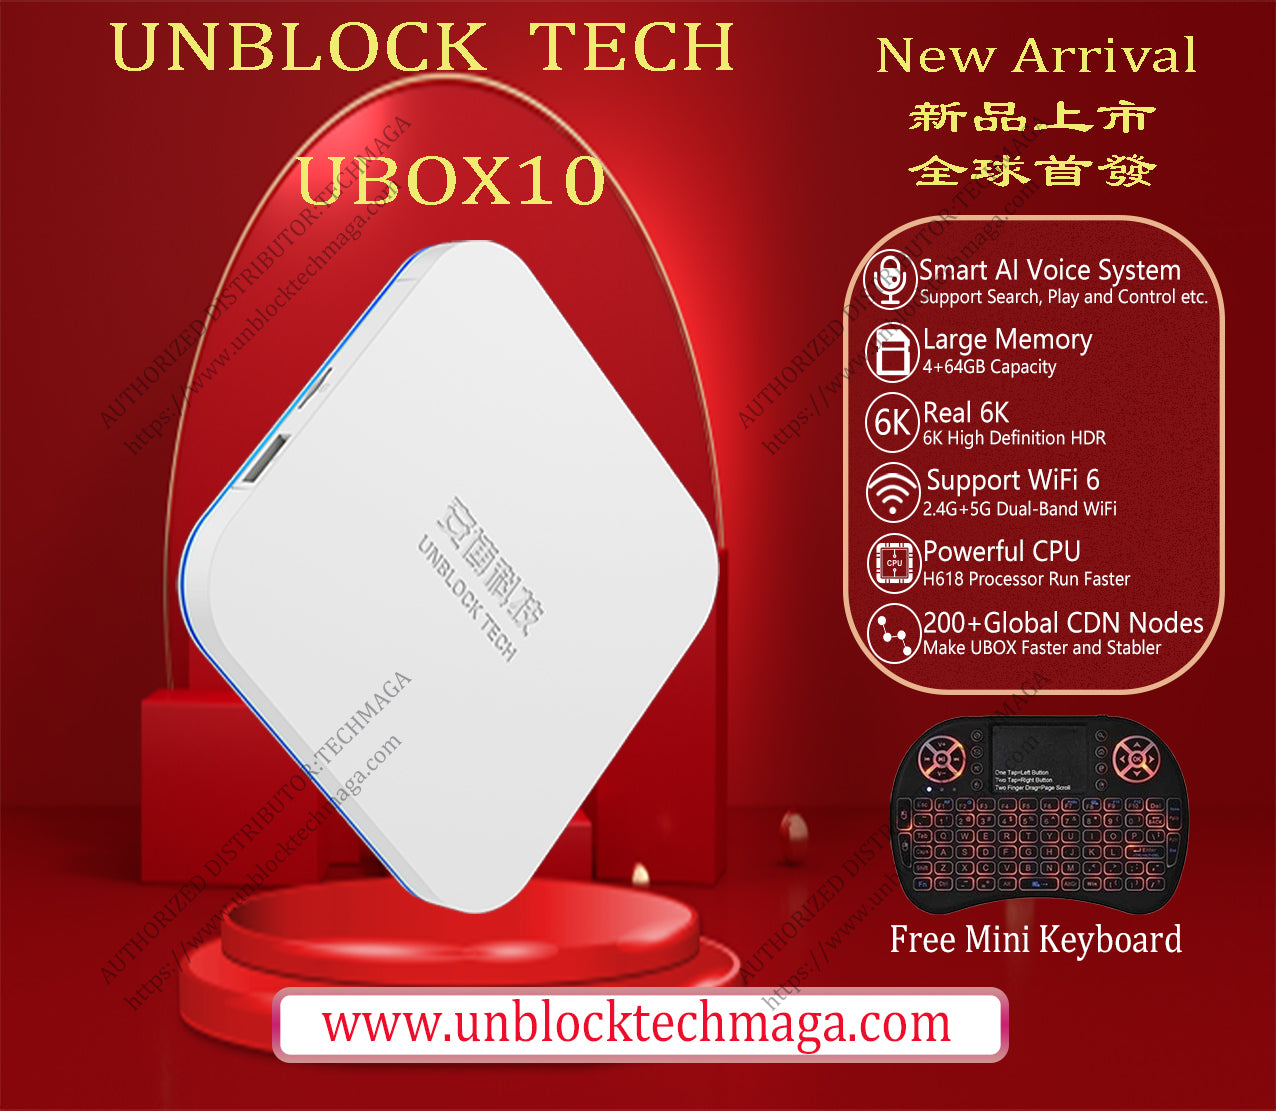 Unblock Ubox10 UB10安博TVbox2023年最新機種 日本仕様 - テレビ/映像機器